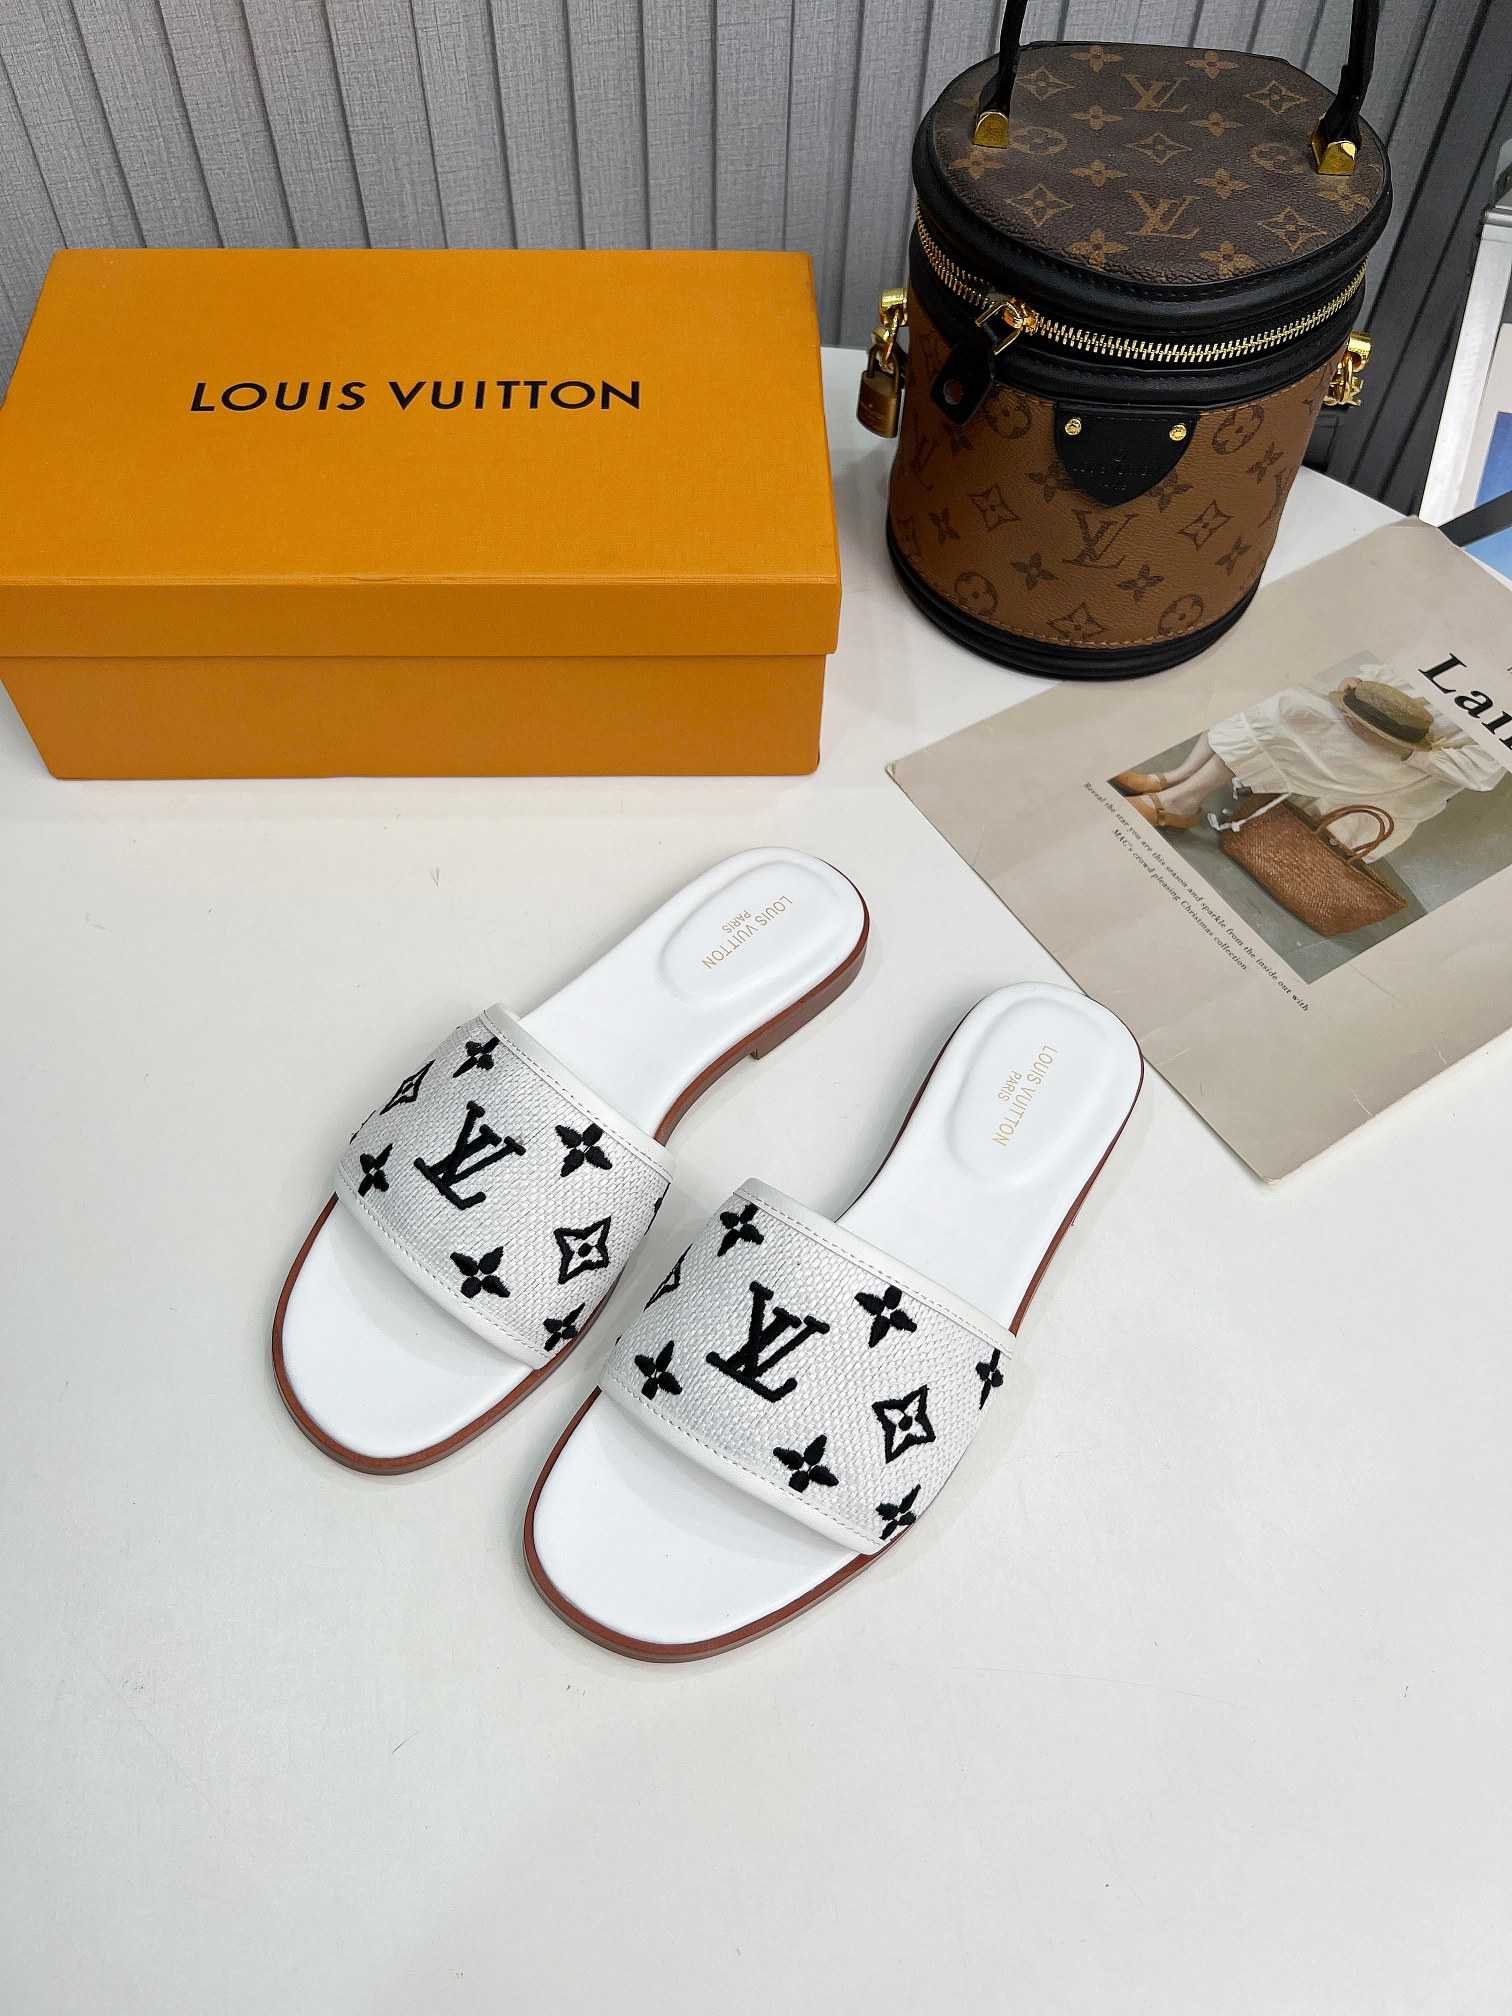 Louis Vuitton 1: 1
 Schoenen Pantoffels Abrikos kleur Zwart Wit Borduurwerk Echt leer Lente/Zomercollectie